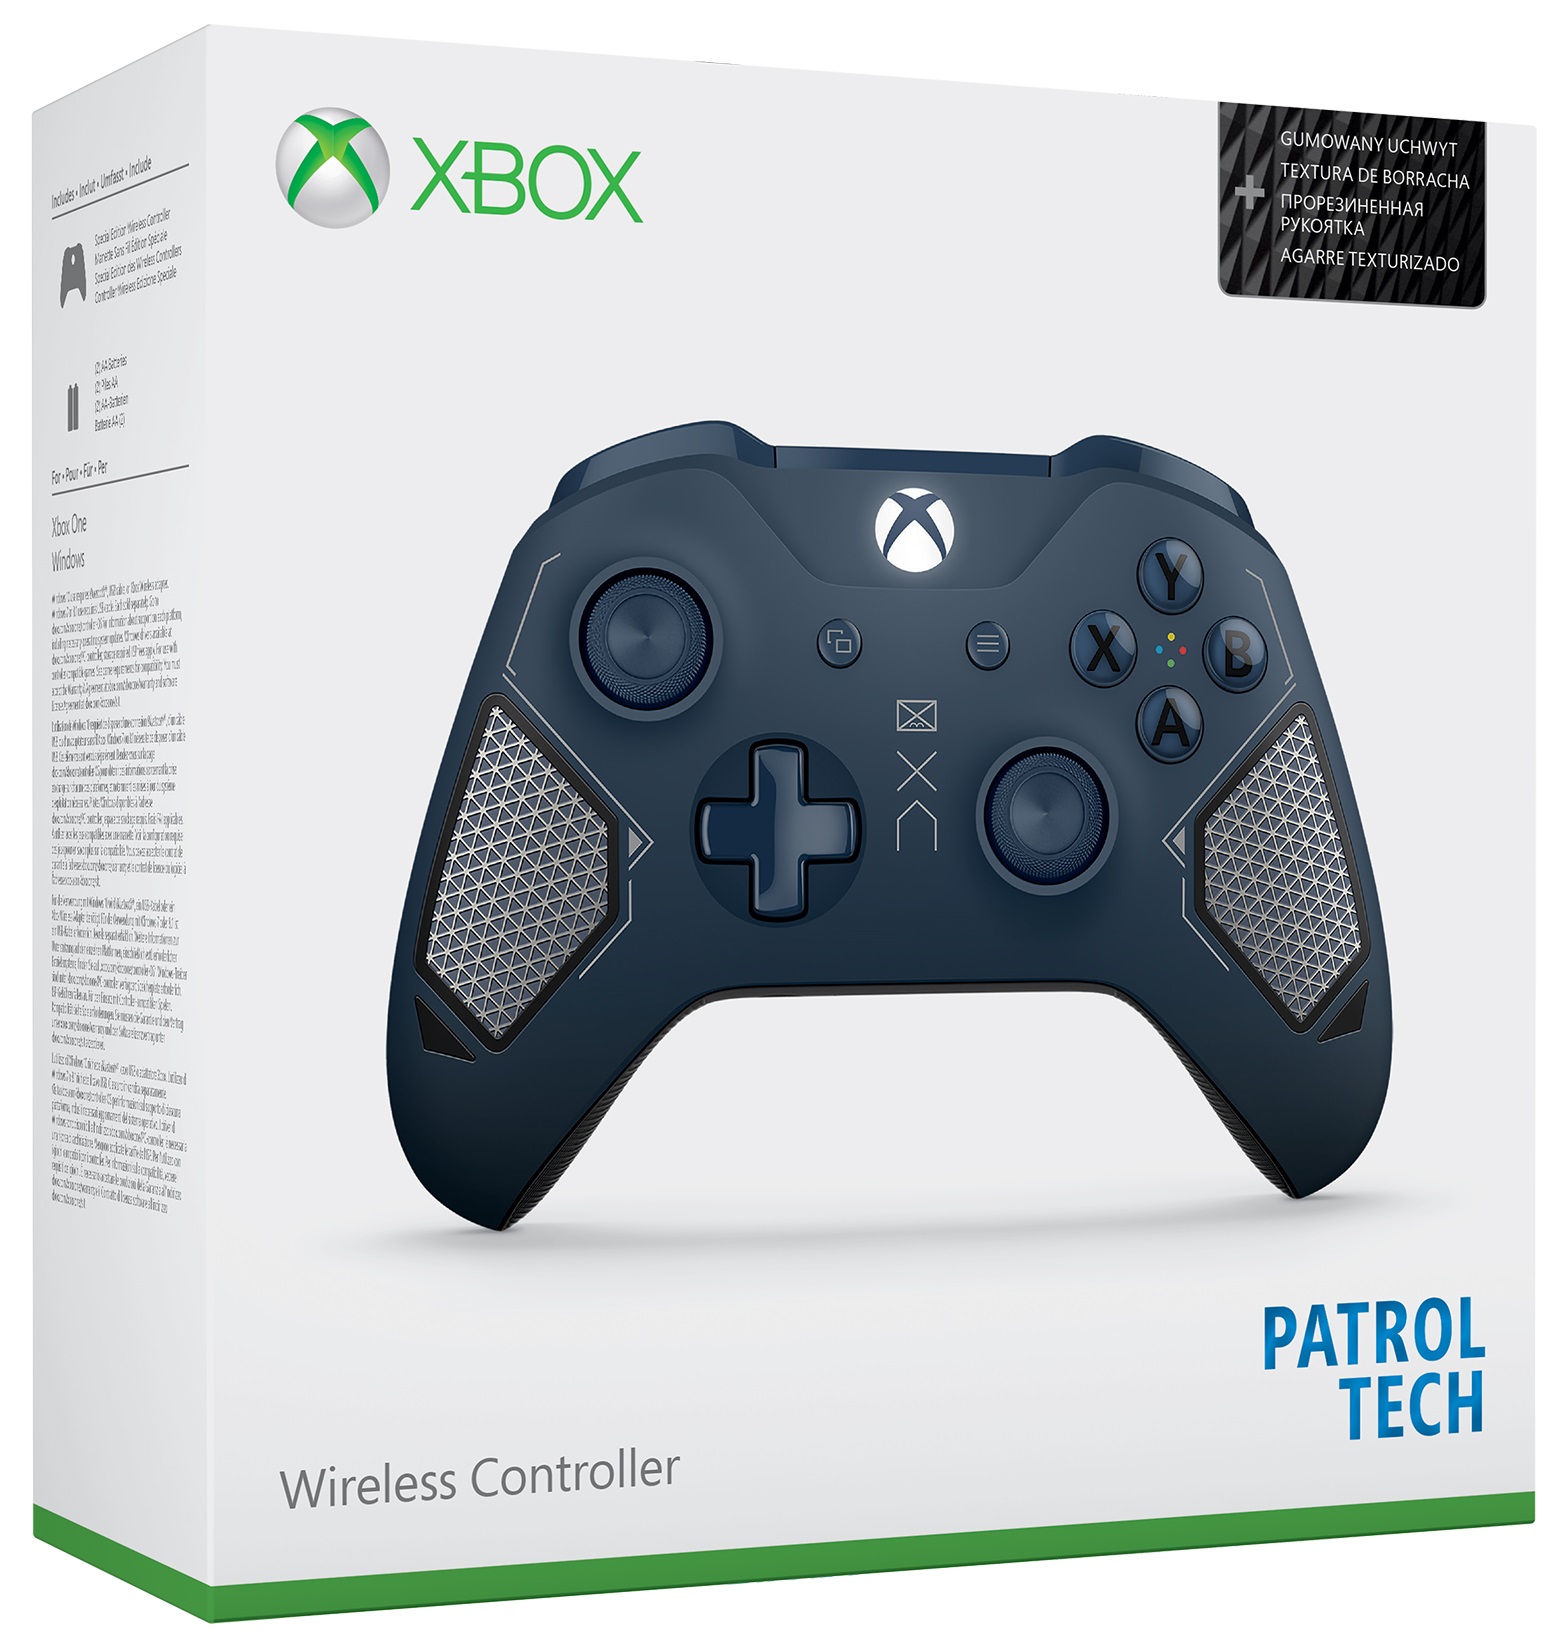 Microsoft Xbox One Wireless Controller Patrol Tech